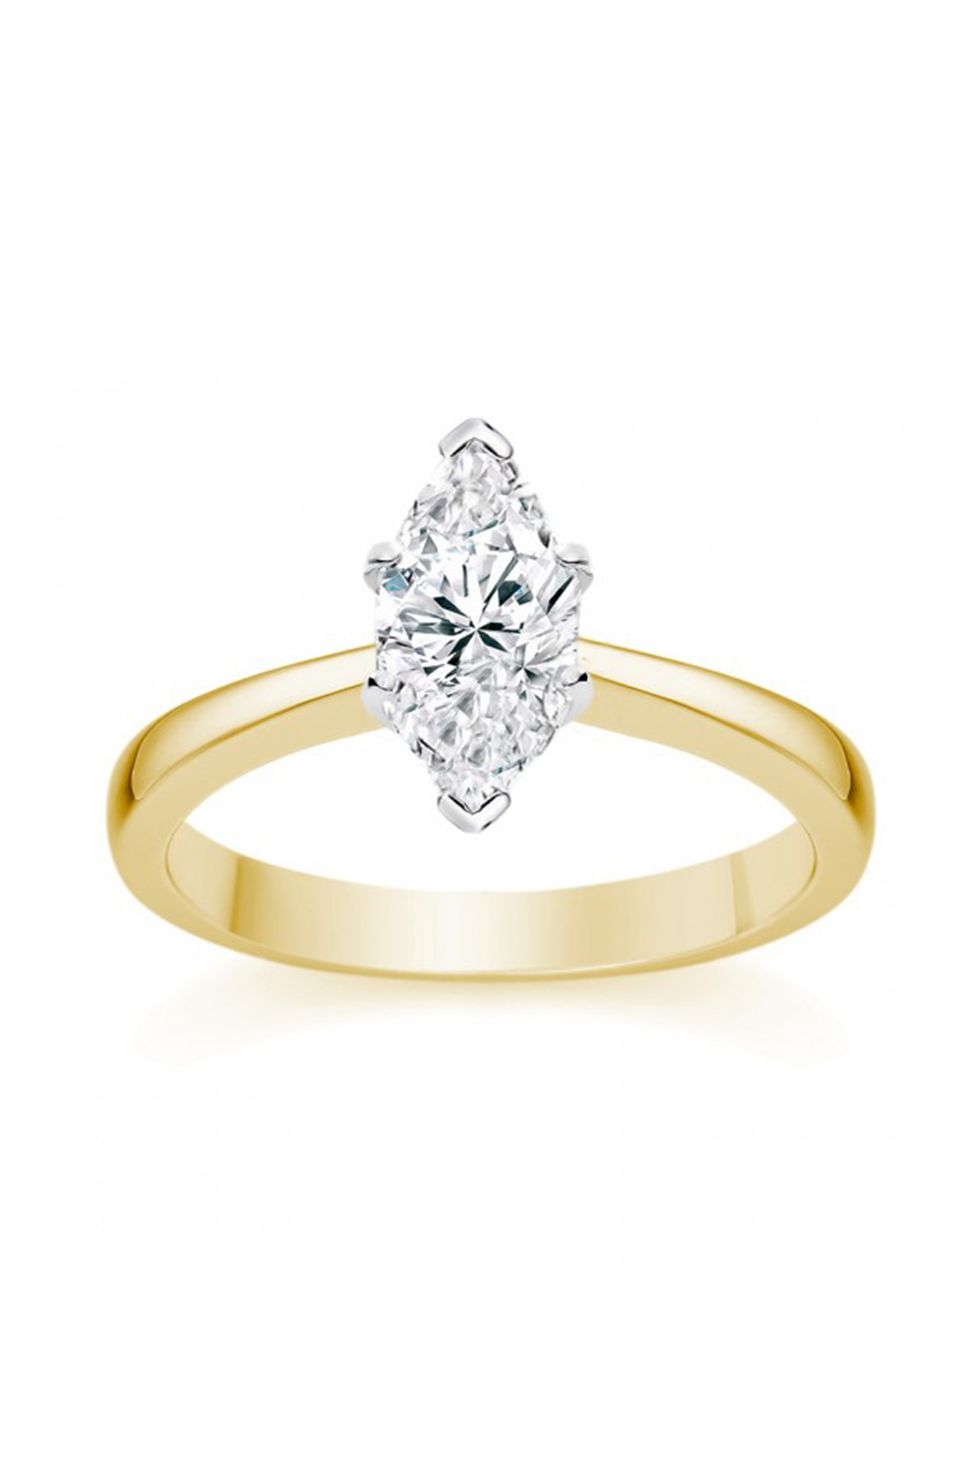 Jewellery, Ring, Fashion accessory, Pre-engagement ring, Engagement ring, Diamond, Body jewelry, Gemstone, Yellow, Platinum, 